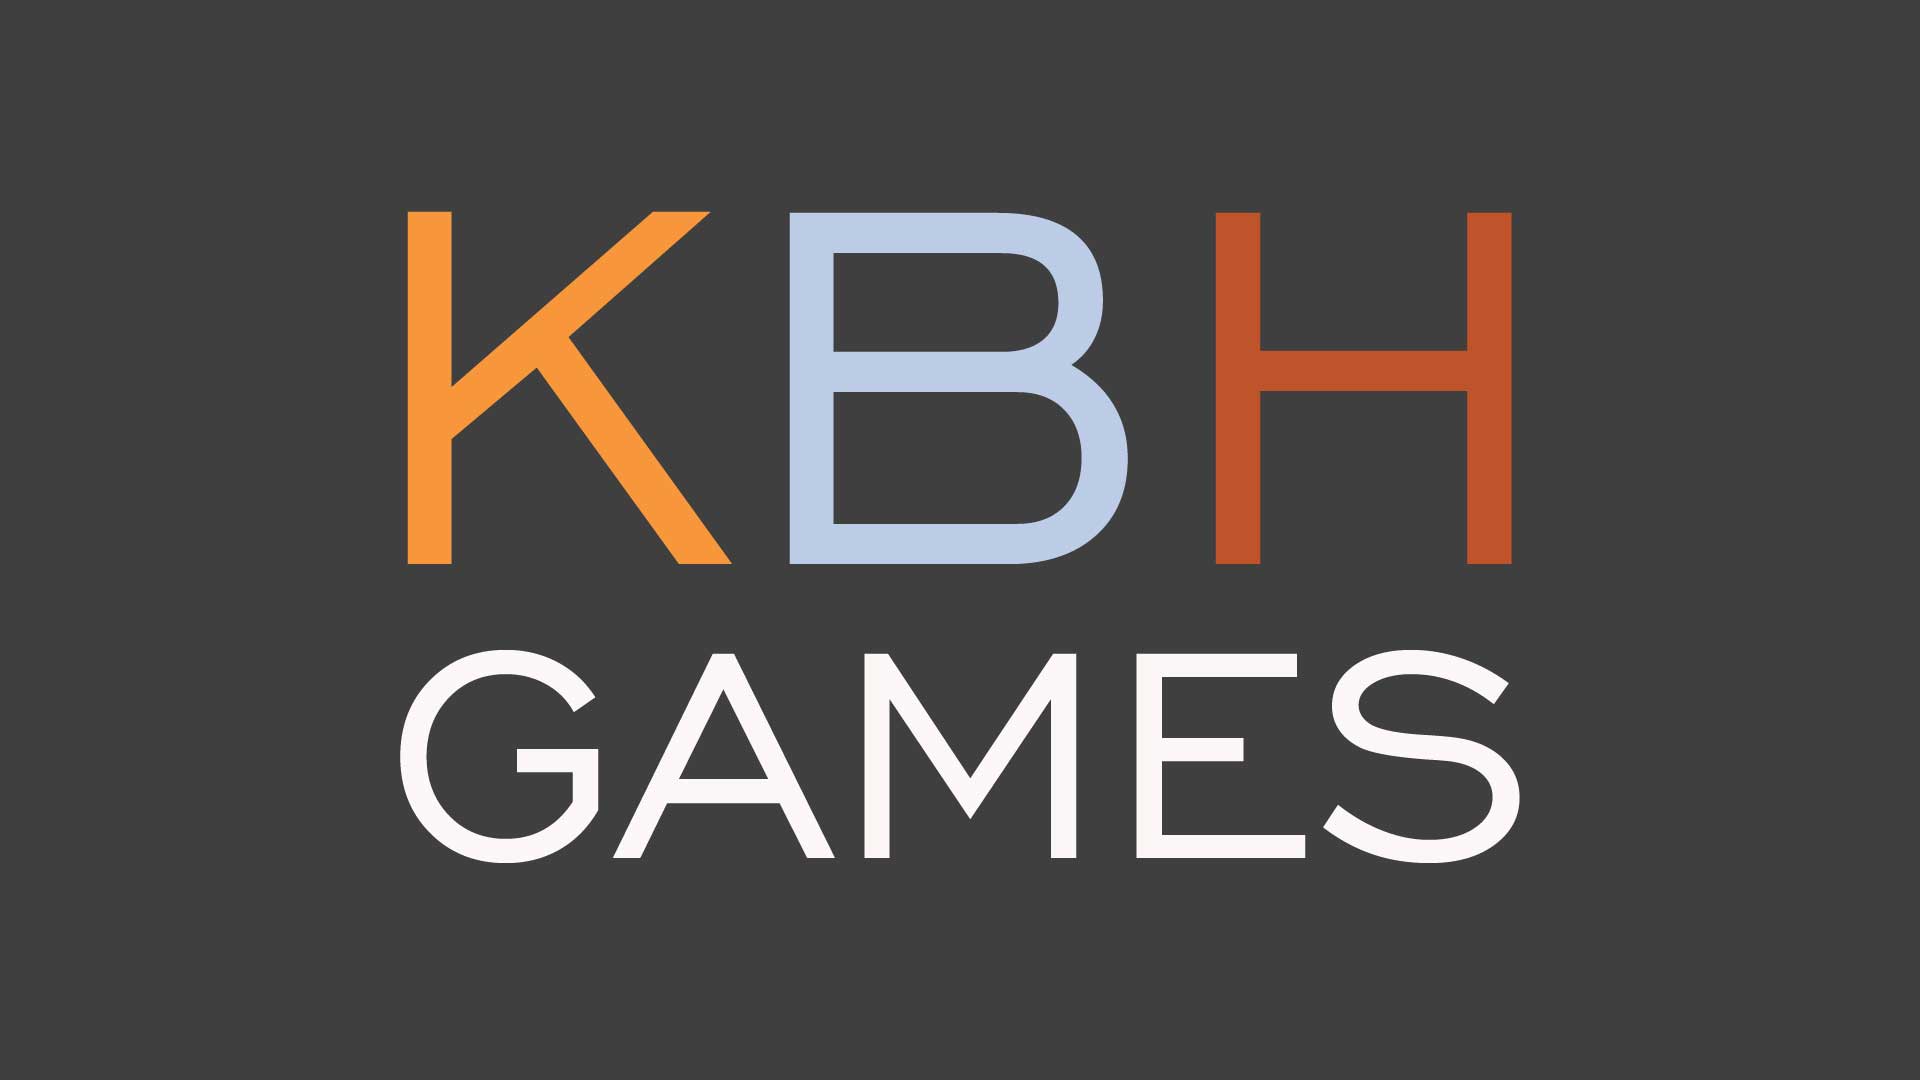 Kbh Games - Play Free Online Games on KBH